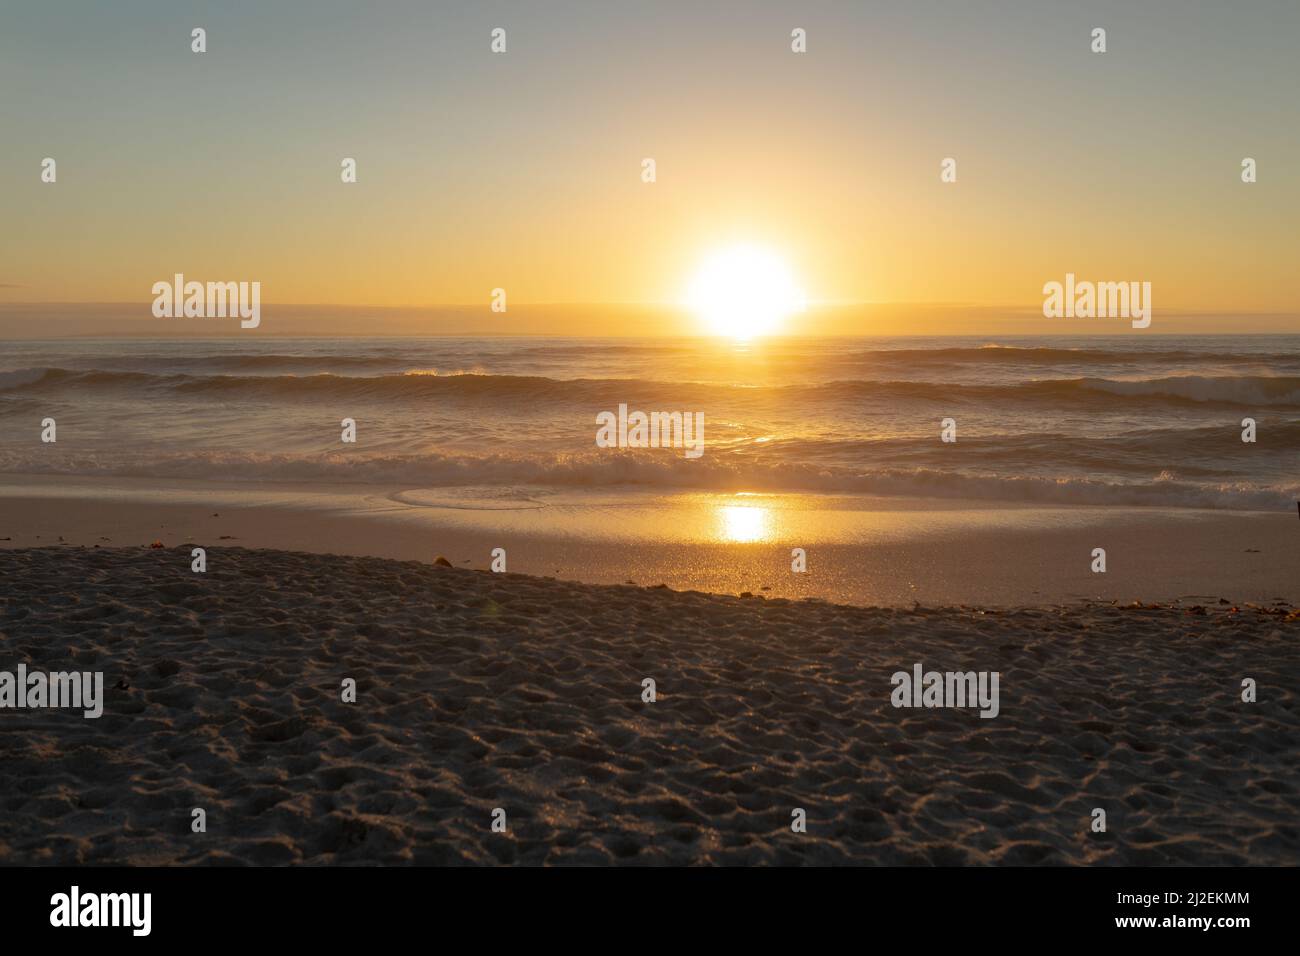 Idyllic shot of orange sun setting over sea seen from beach Stock Photo